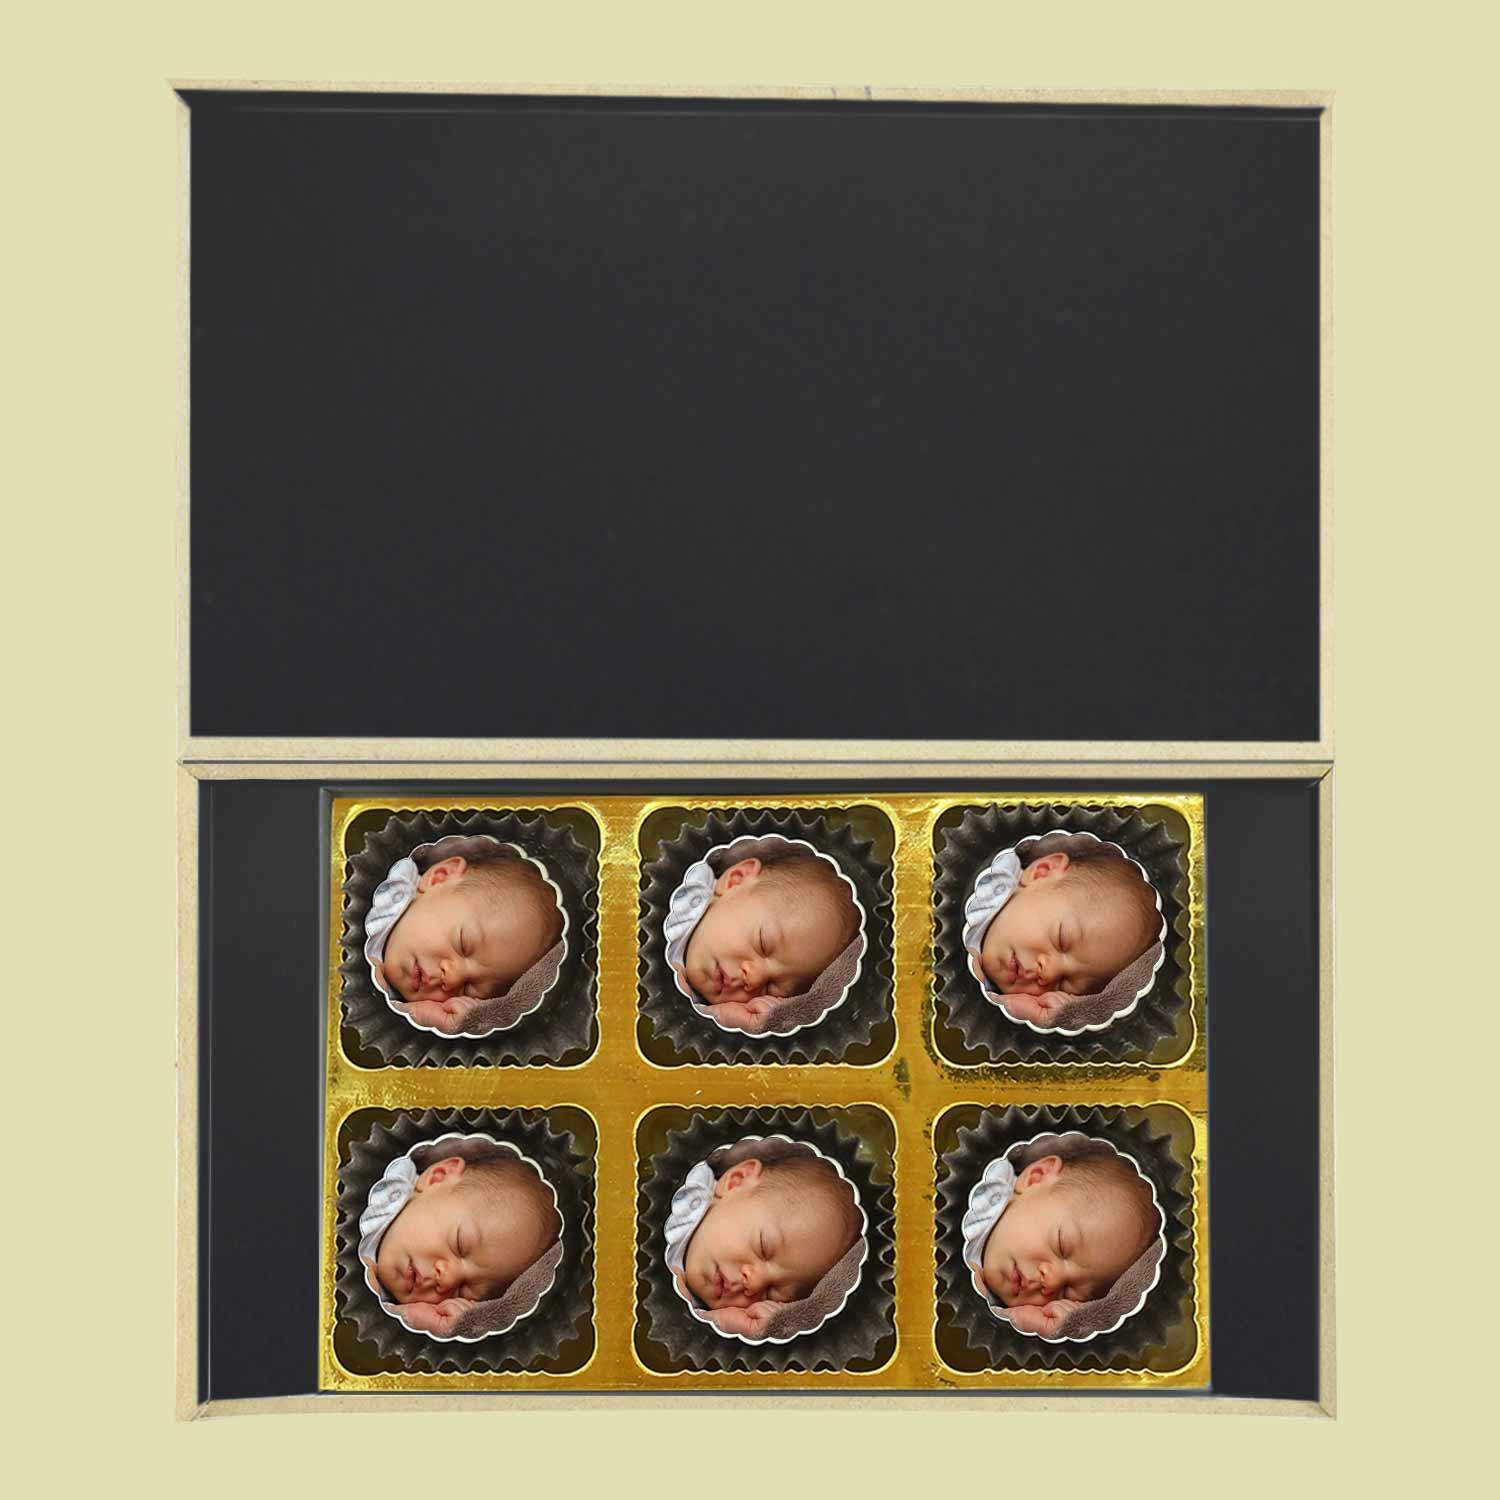 1st Birthday invitation Photo Printed chocolates gift - Choco ManualART